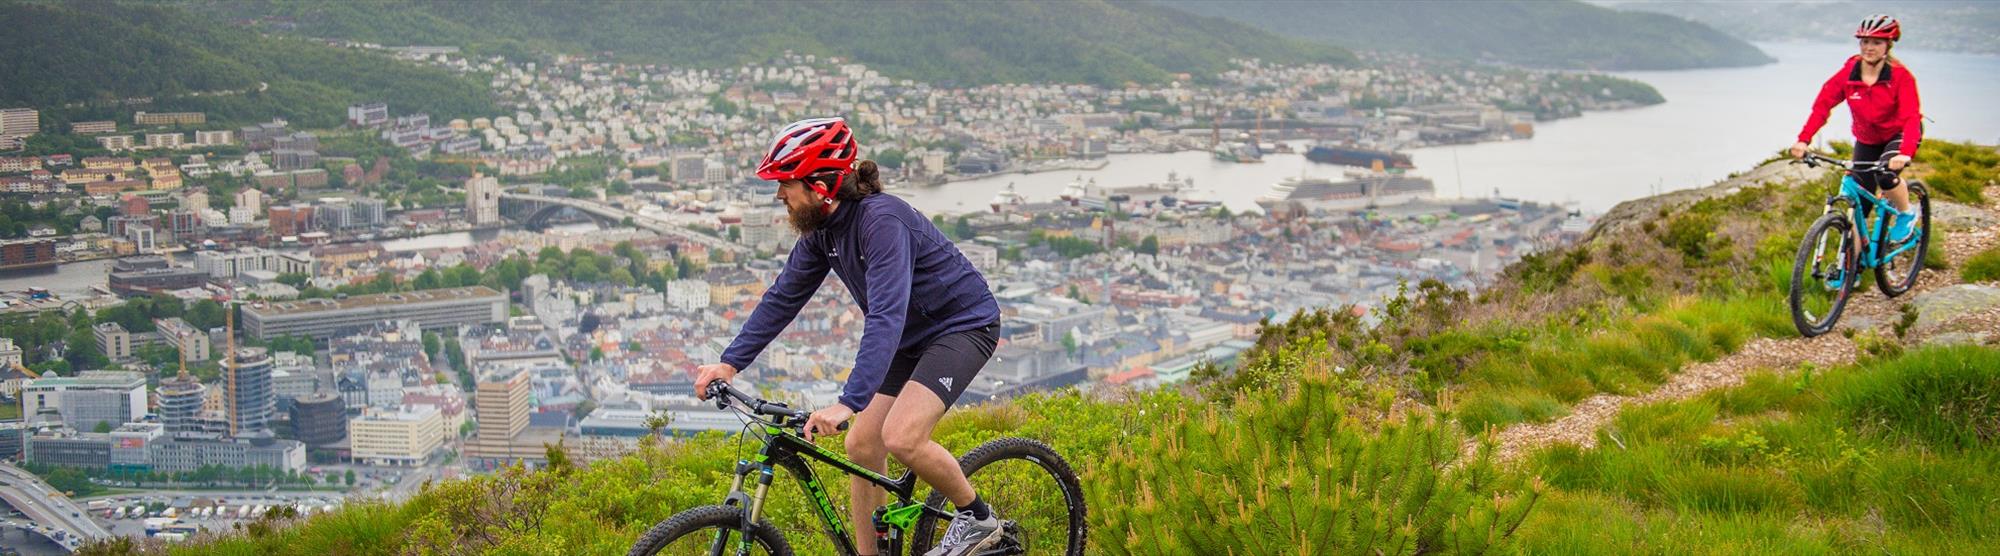 På sykkel i Bergen